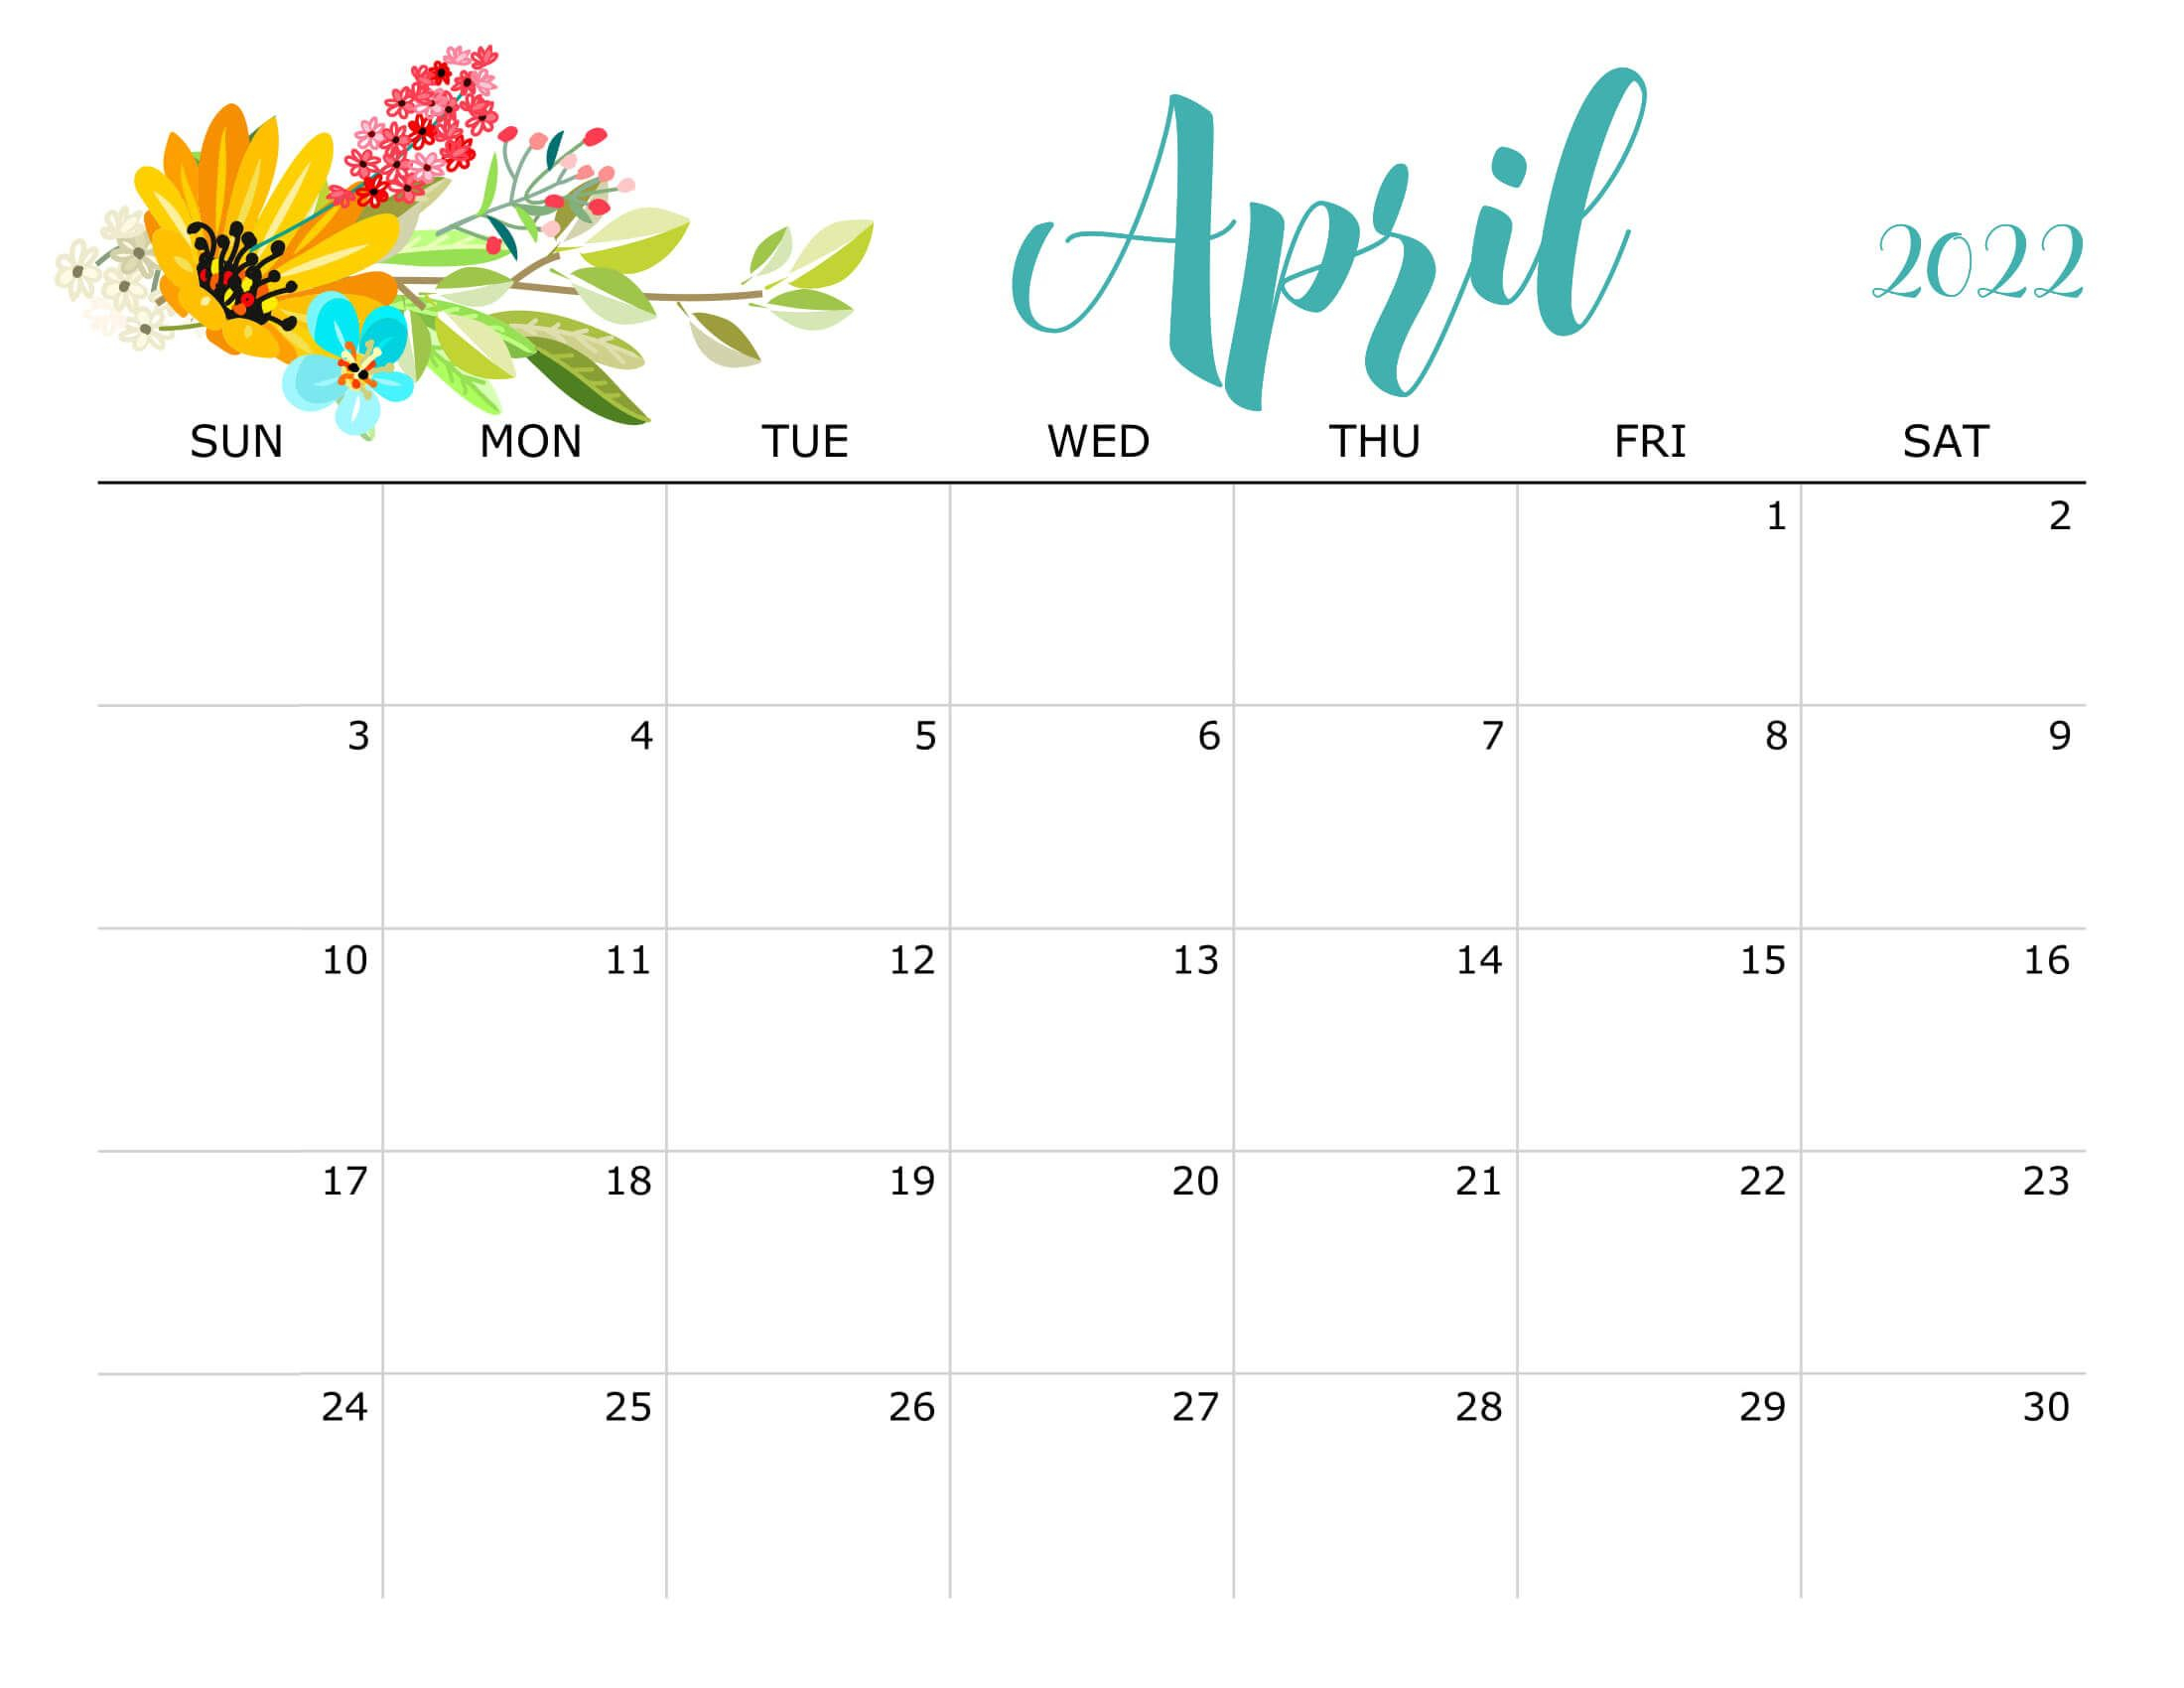 Calendar Blank 2022 April